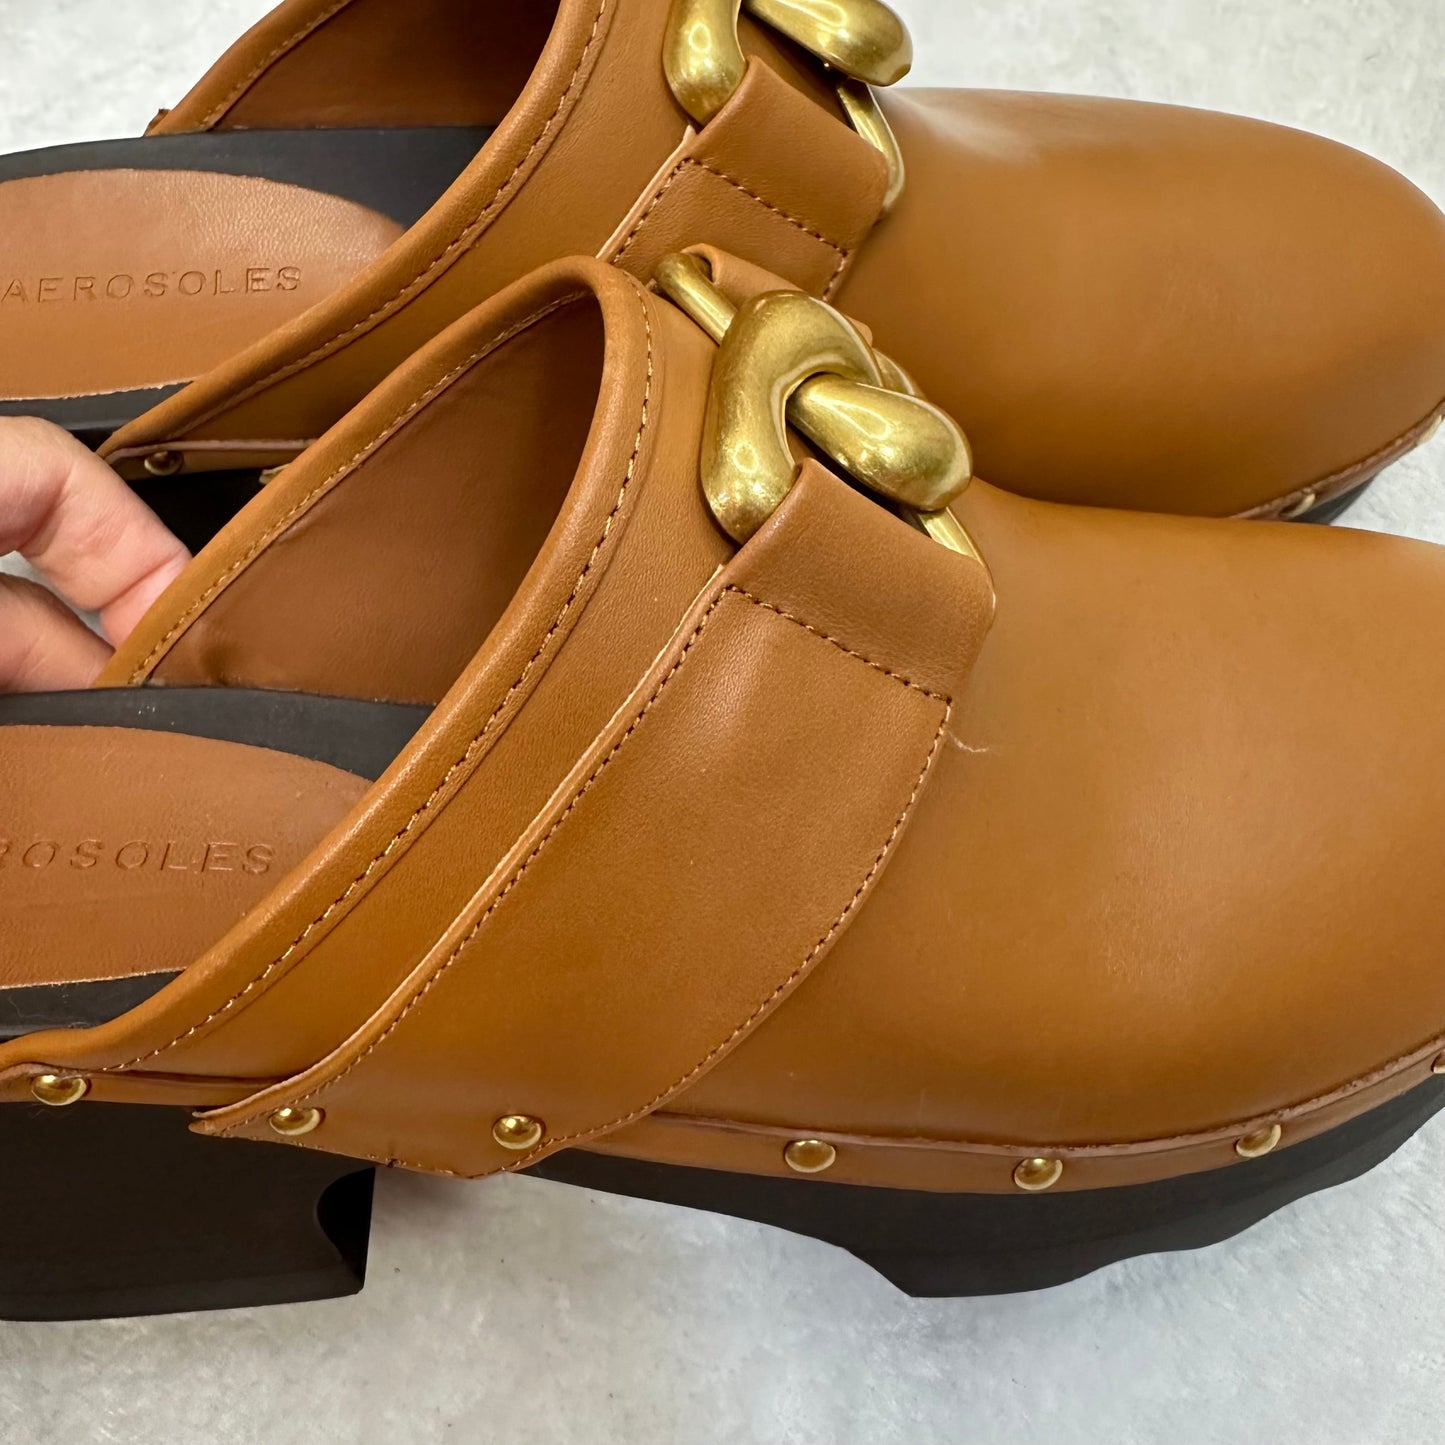 Brown Shoes Heels Block Aeropostale, Size 8.5